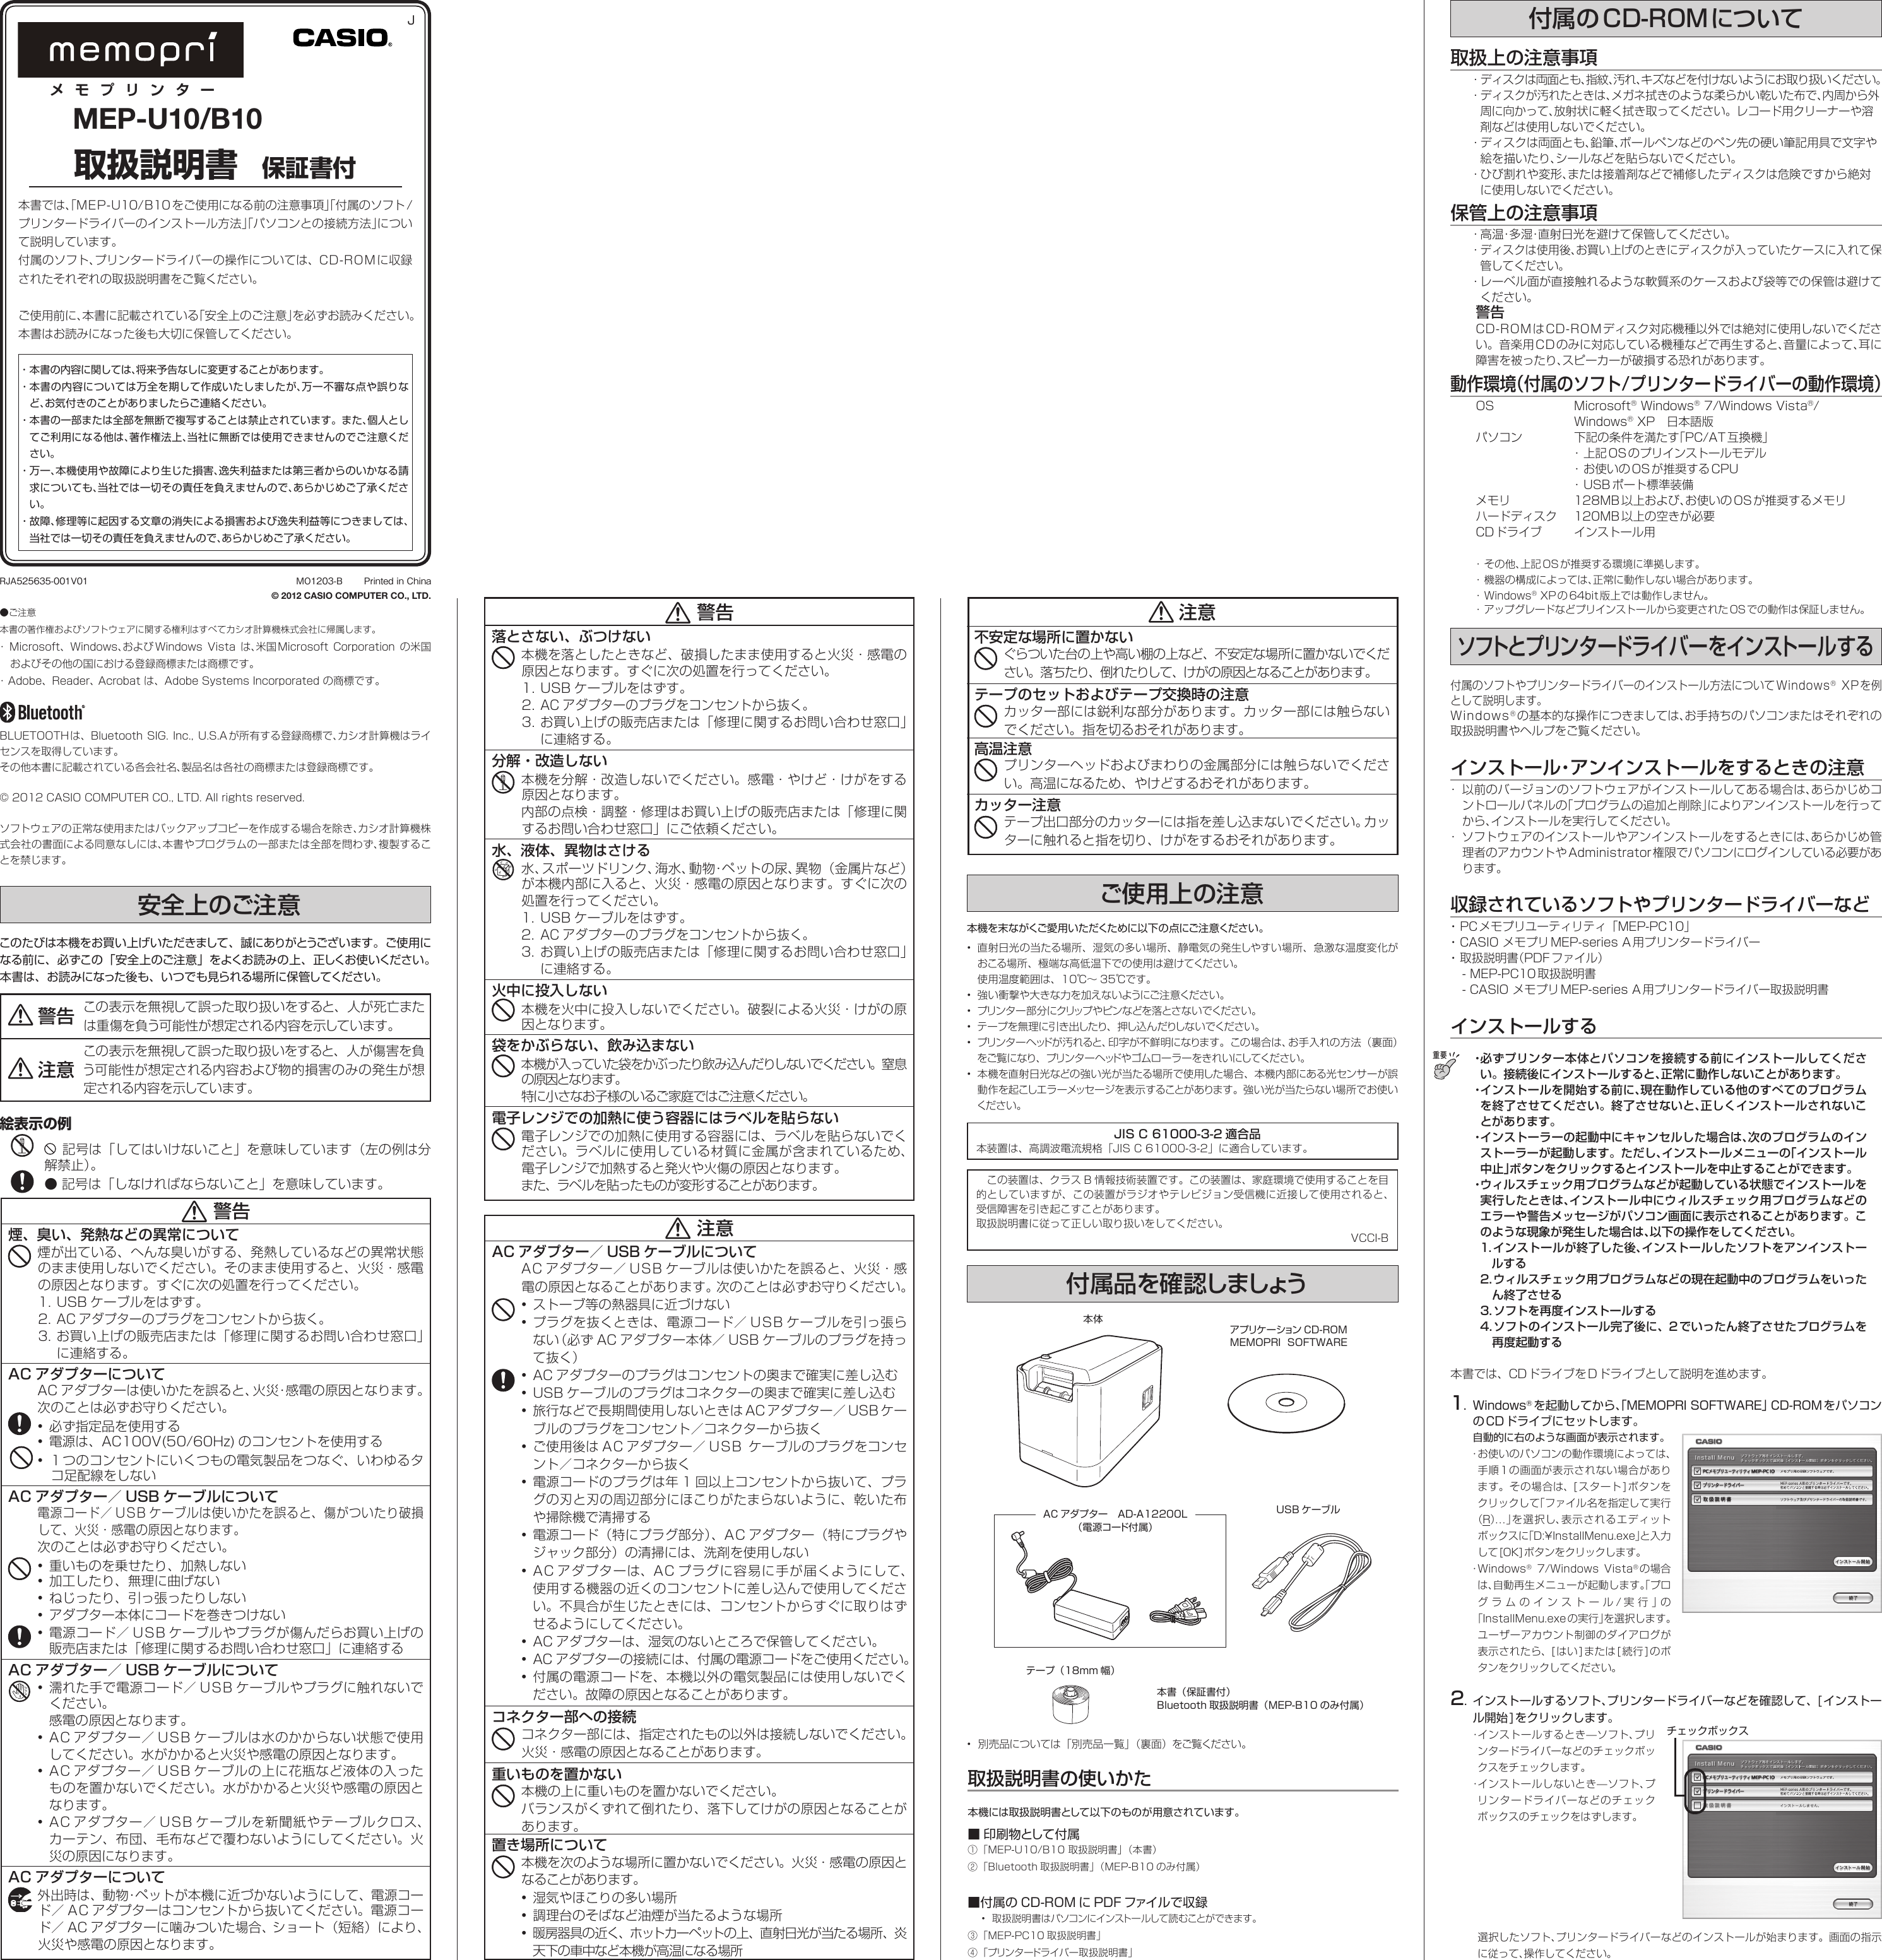 Page 2 of 4 - Casio MEP-U10_B10 MEP-B10 MEP-U10 B10